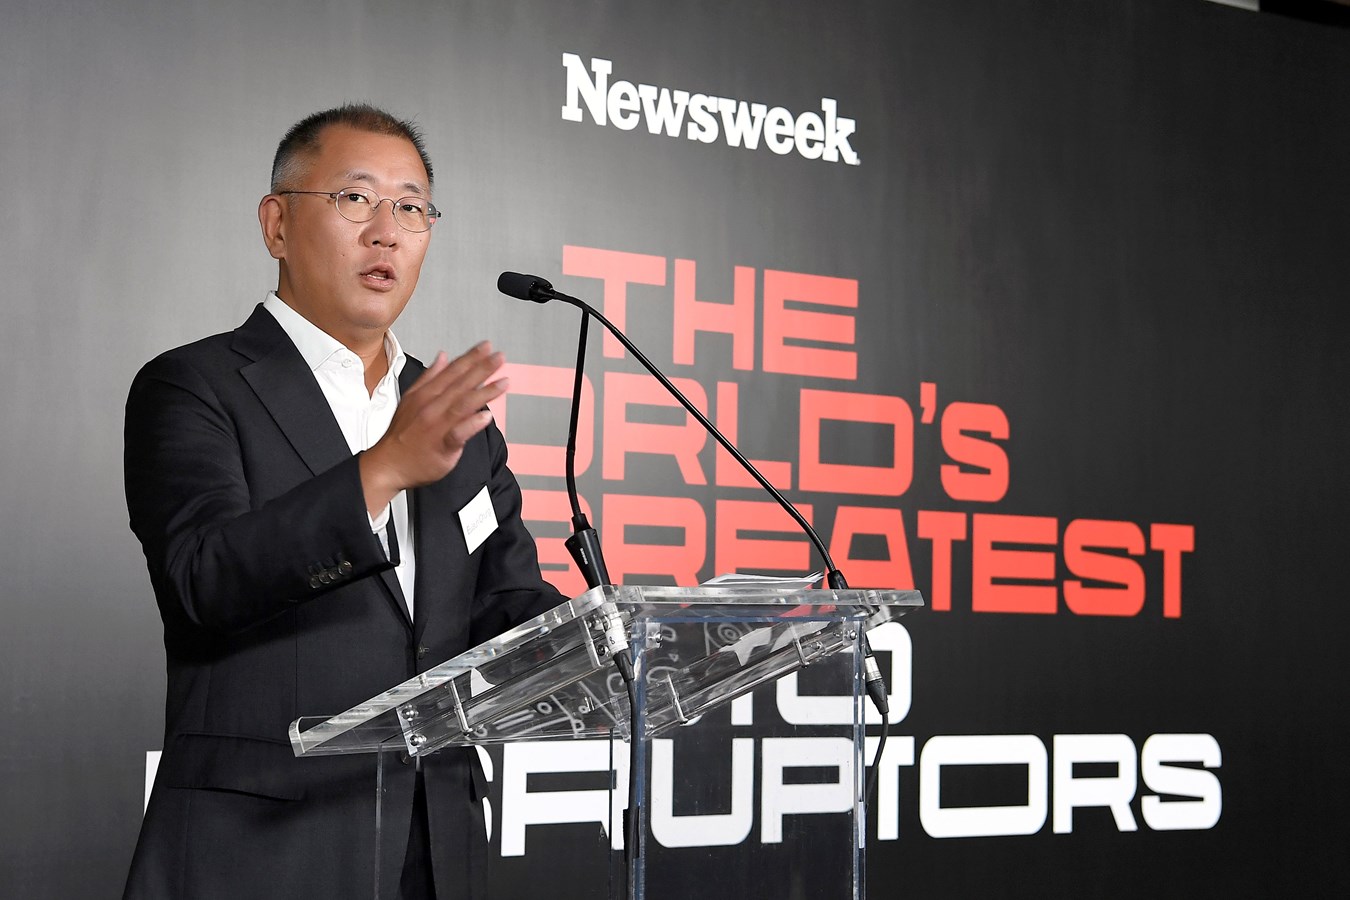 Hyundai Motor Group Executive Chair Euisun Chung named as the ‘Visionary of the Year’ at Newsweek’s World’s Greatest Auto Disruptors Award